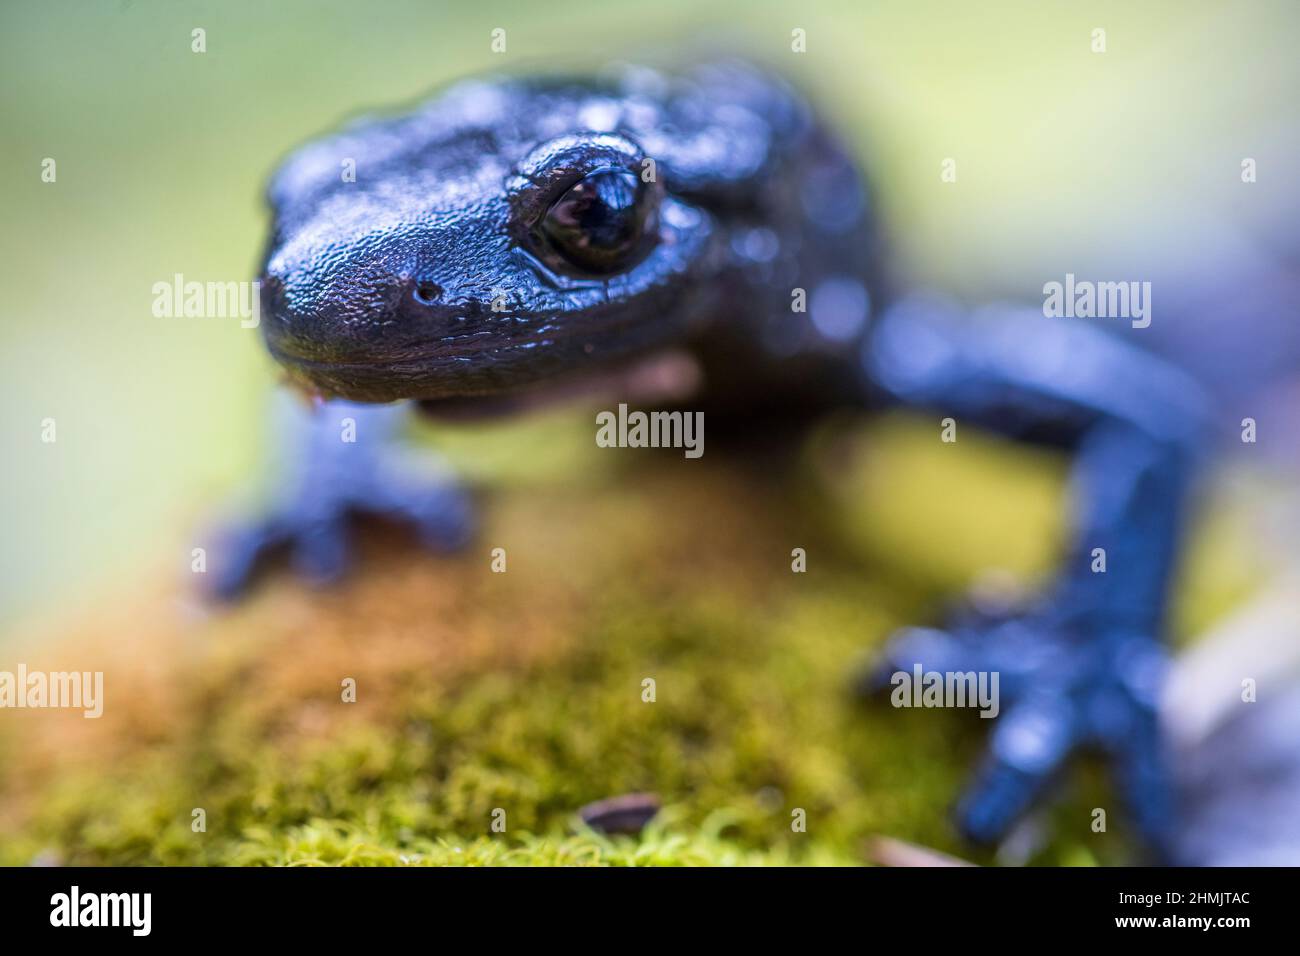 Alpine salamander (Salamandra atra atra) is a shiny black salamander found in the Alps. Stock Photo